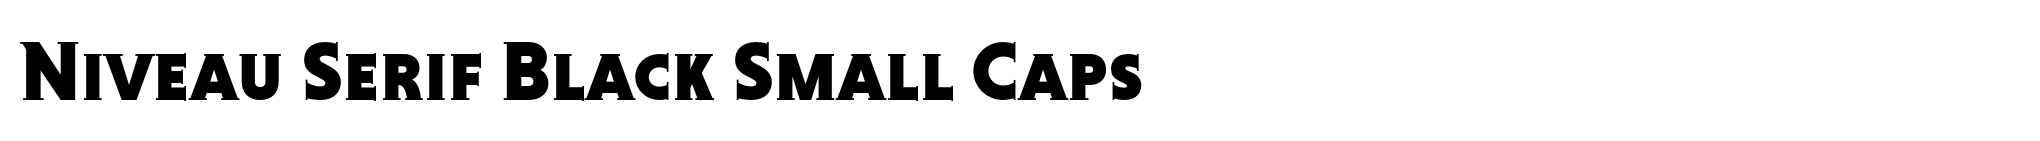 Niveau Serif Black Small Caps image